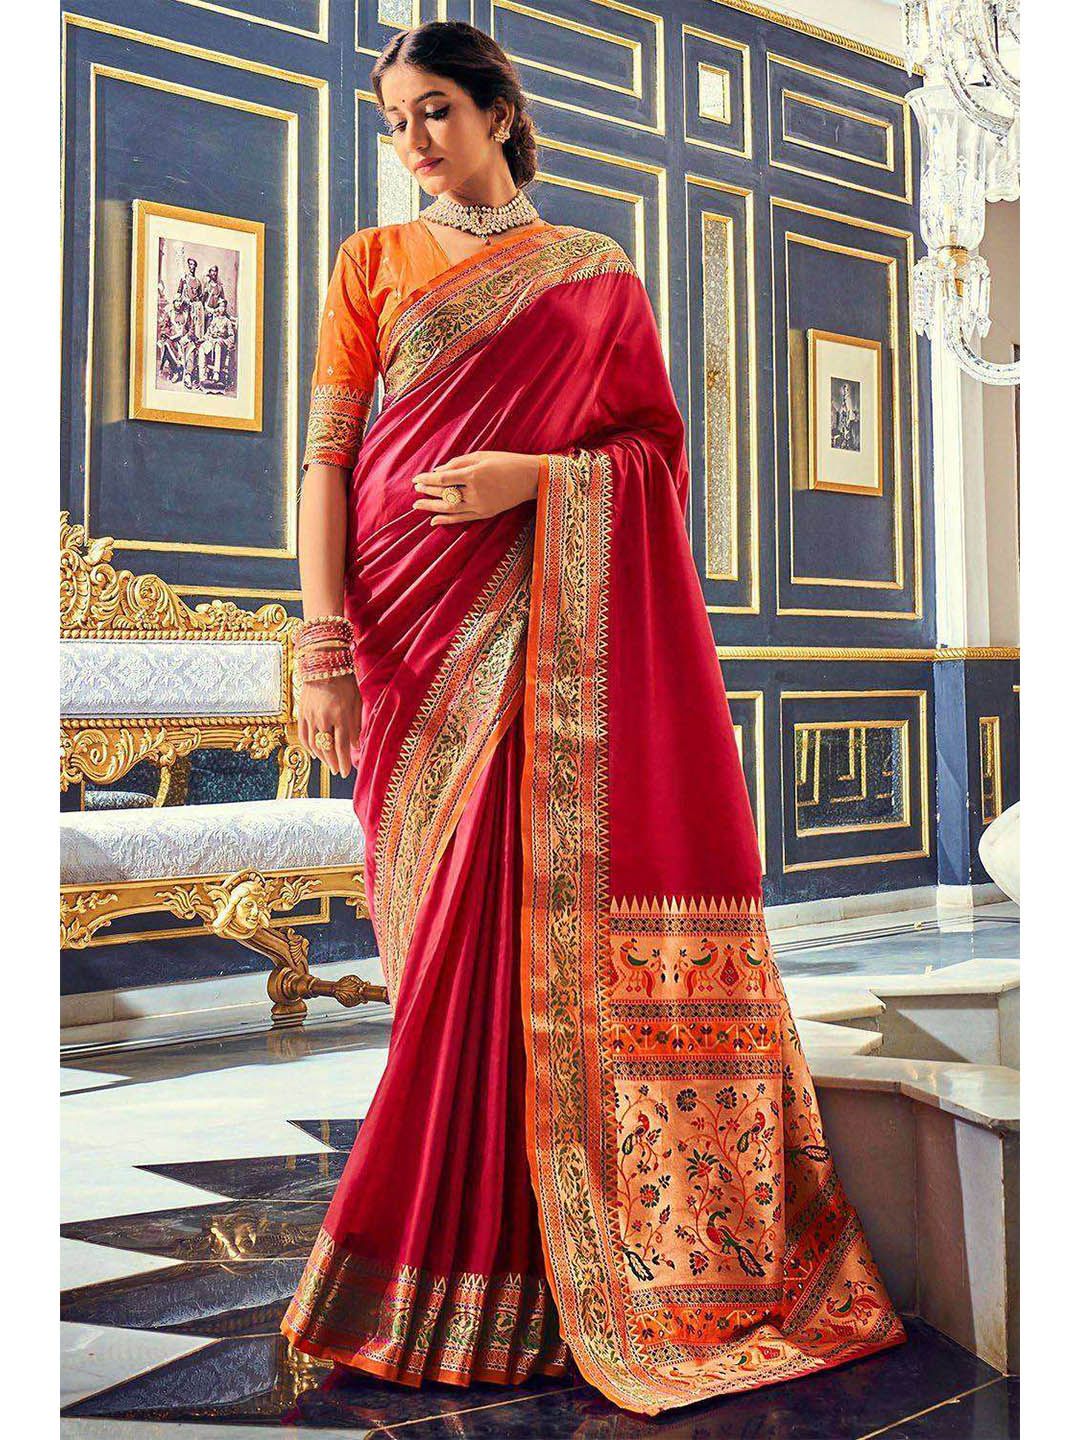 KARAGIRI Red & Gold-Toned Zari Saree Price in India